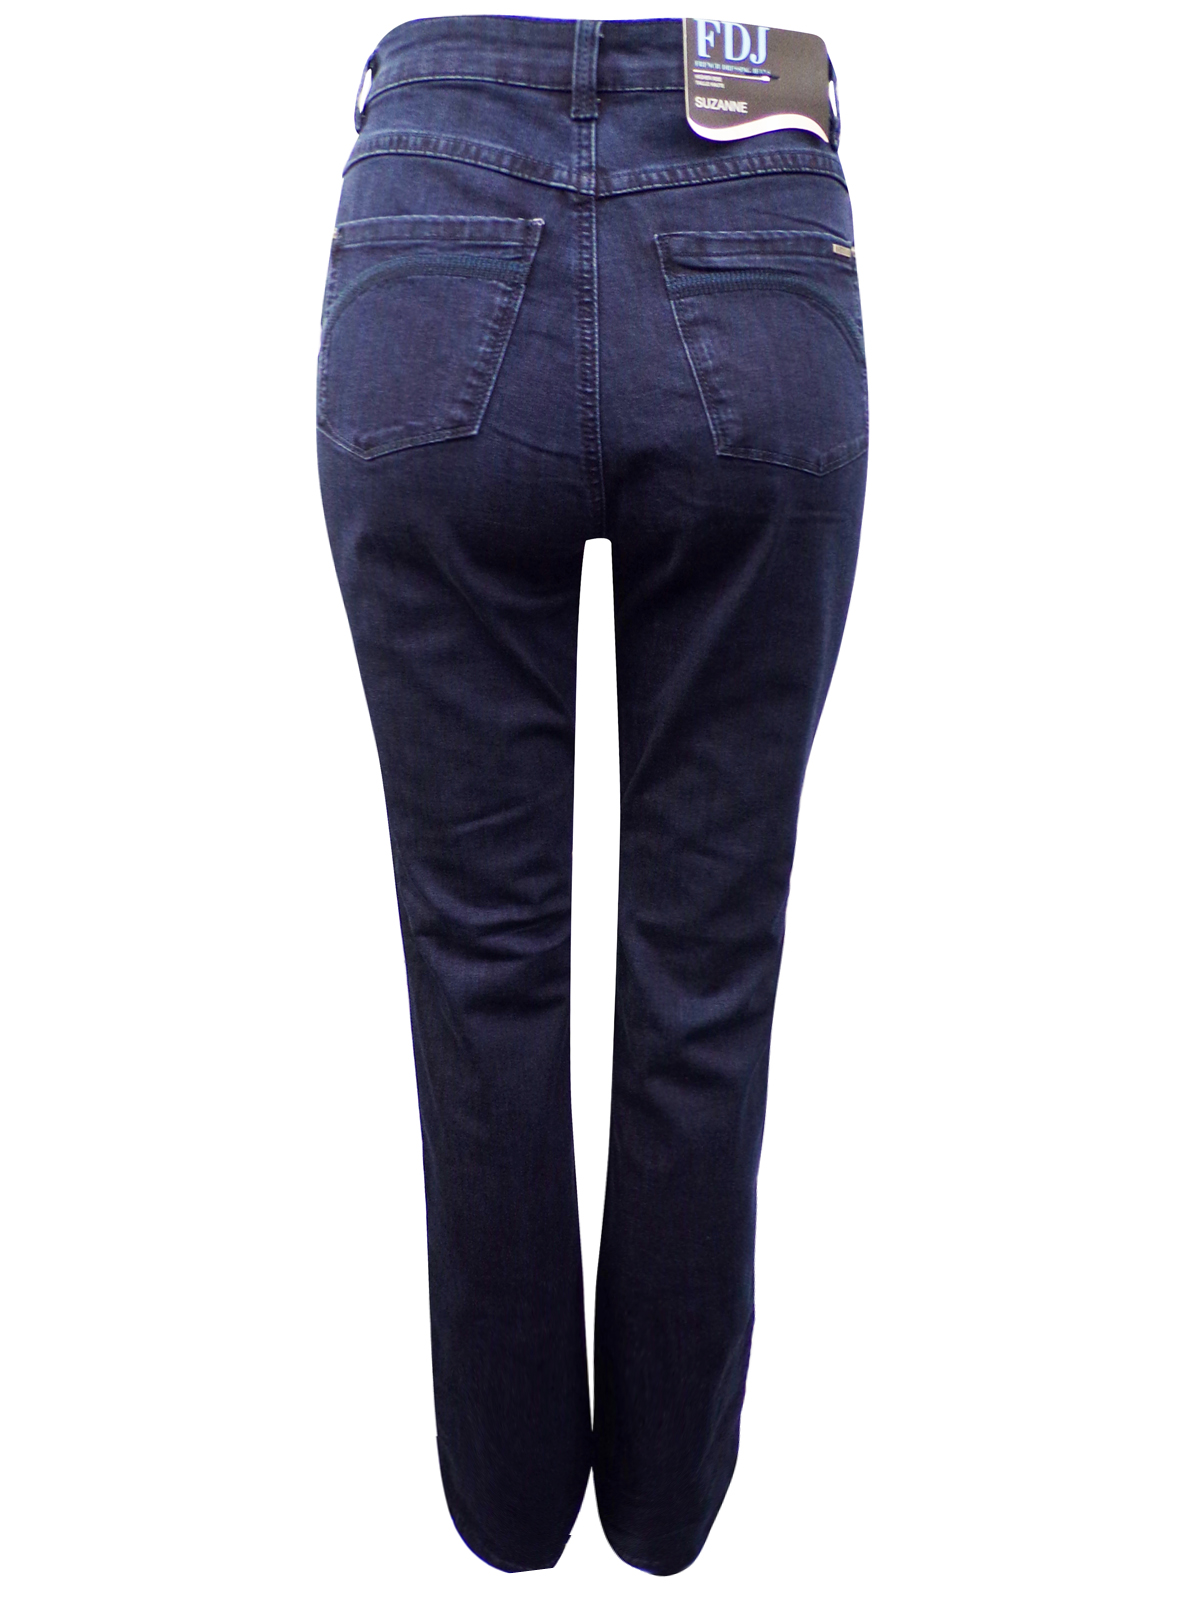 FDJ - - FDJ PLEASANT Suzanne Slim Leg Denim Jeans - Size 8 to 22